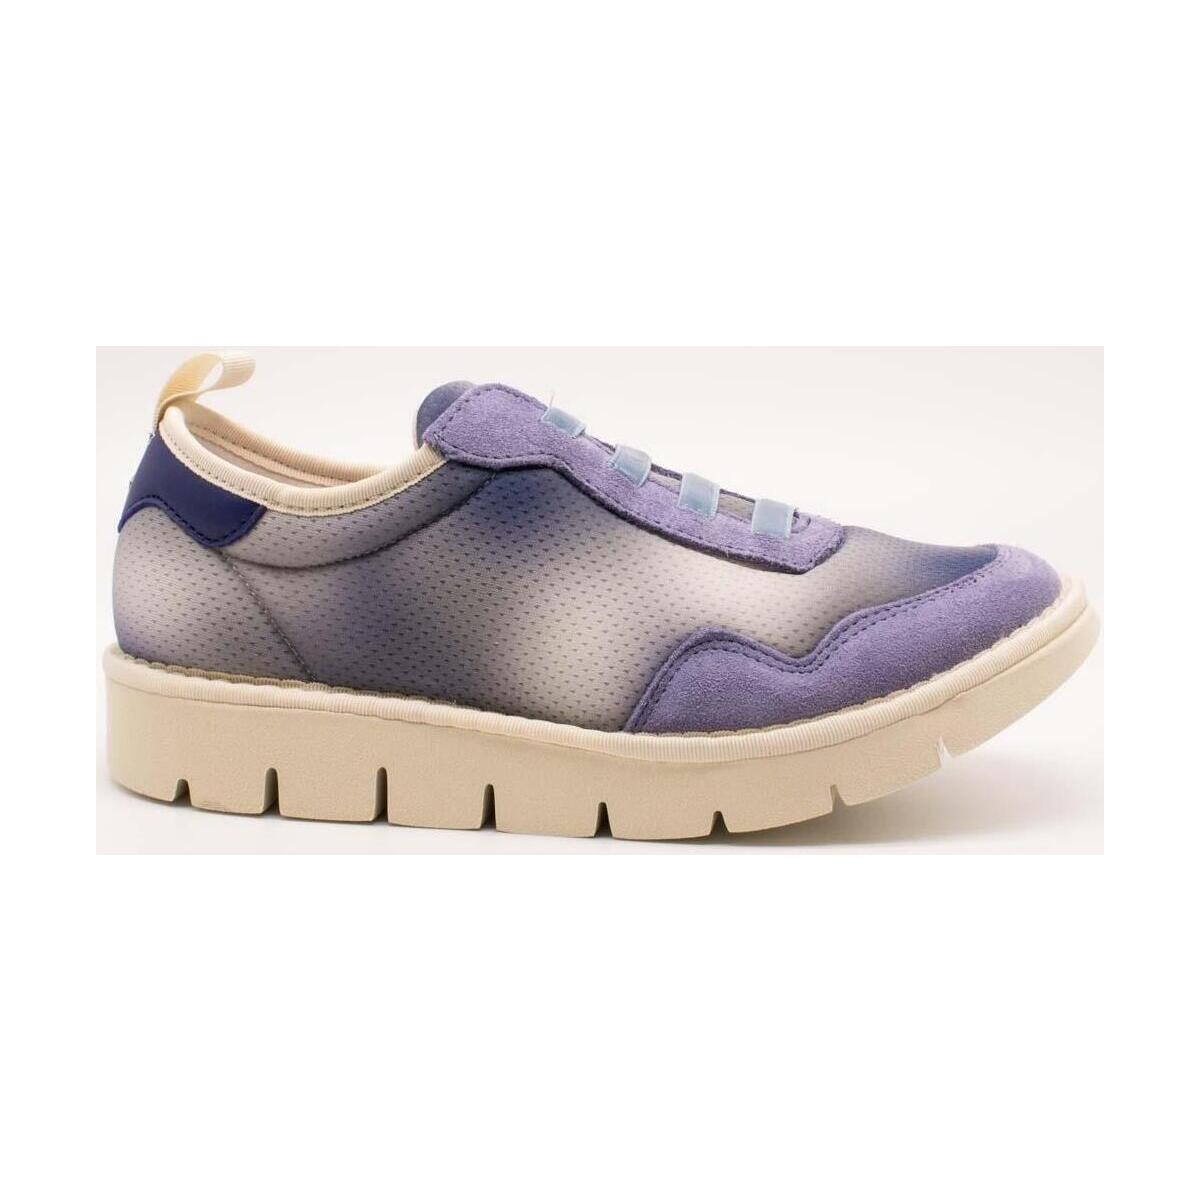 Sko Dame Sneakers Panchic  Violet